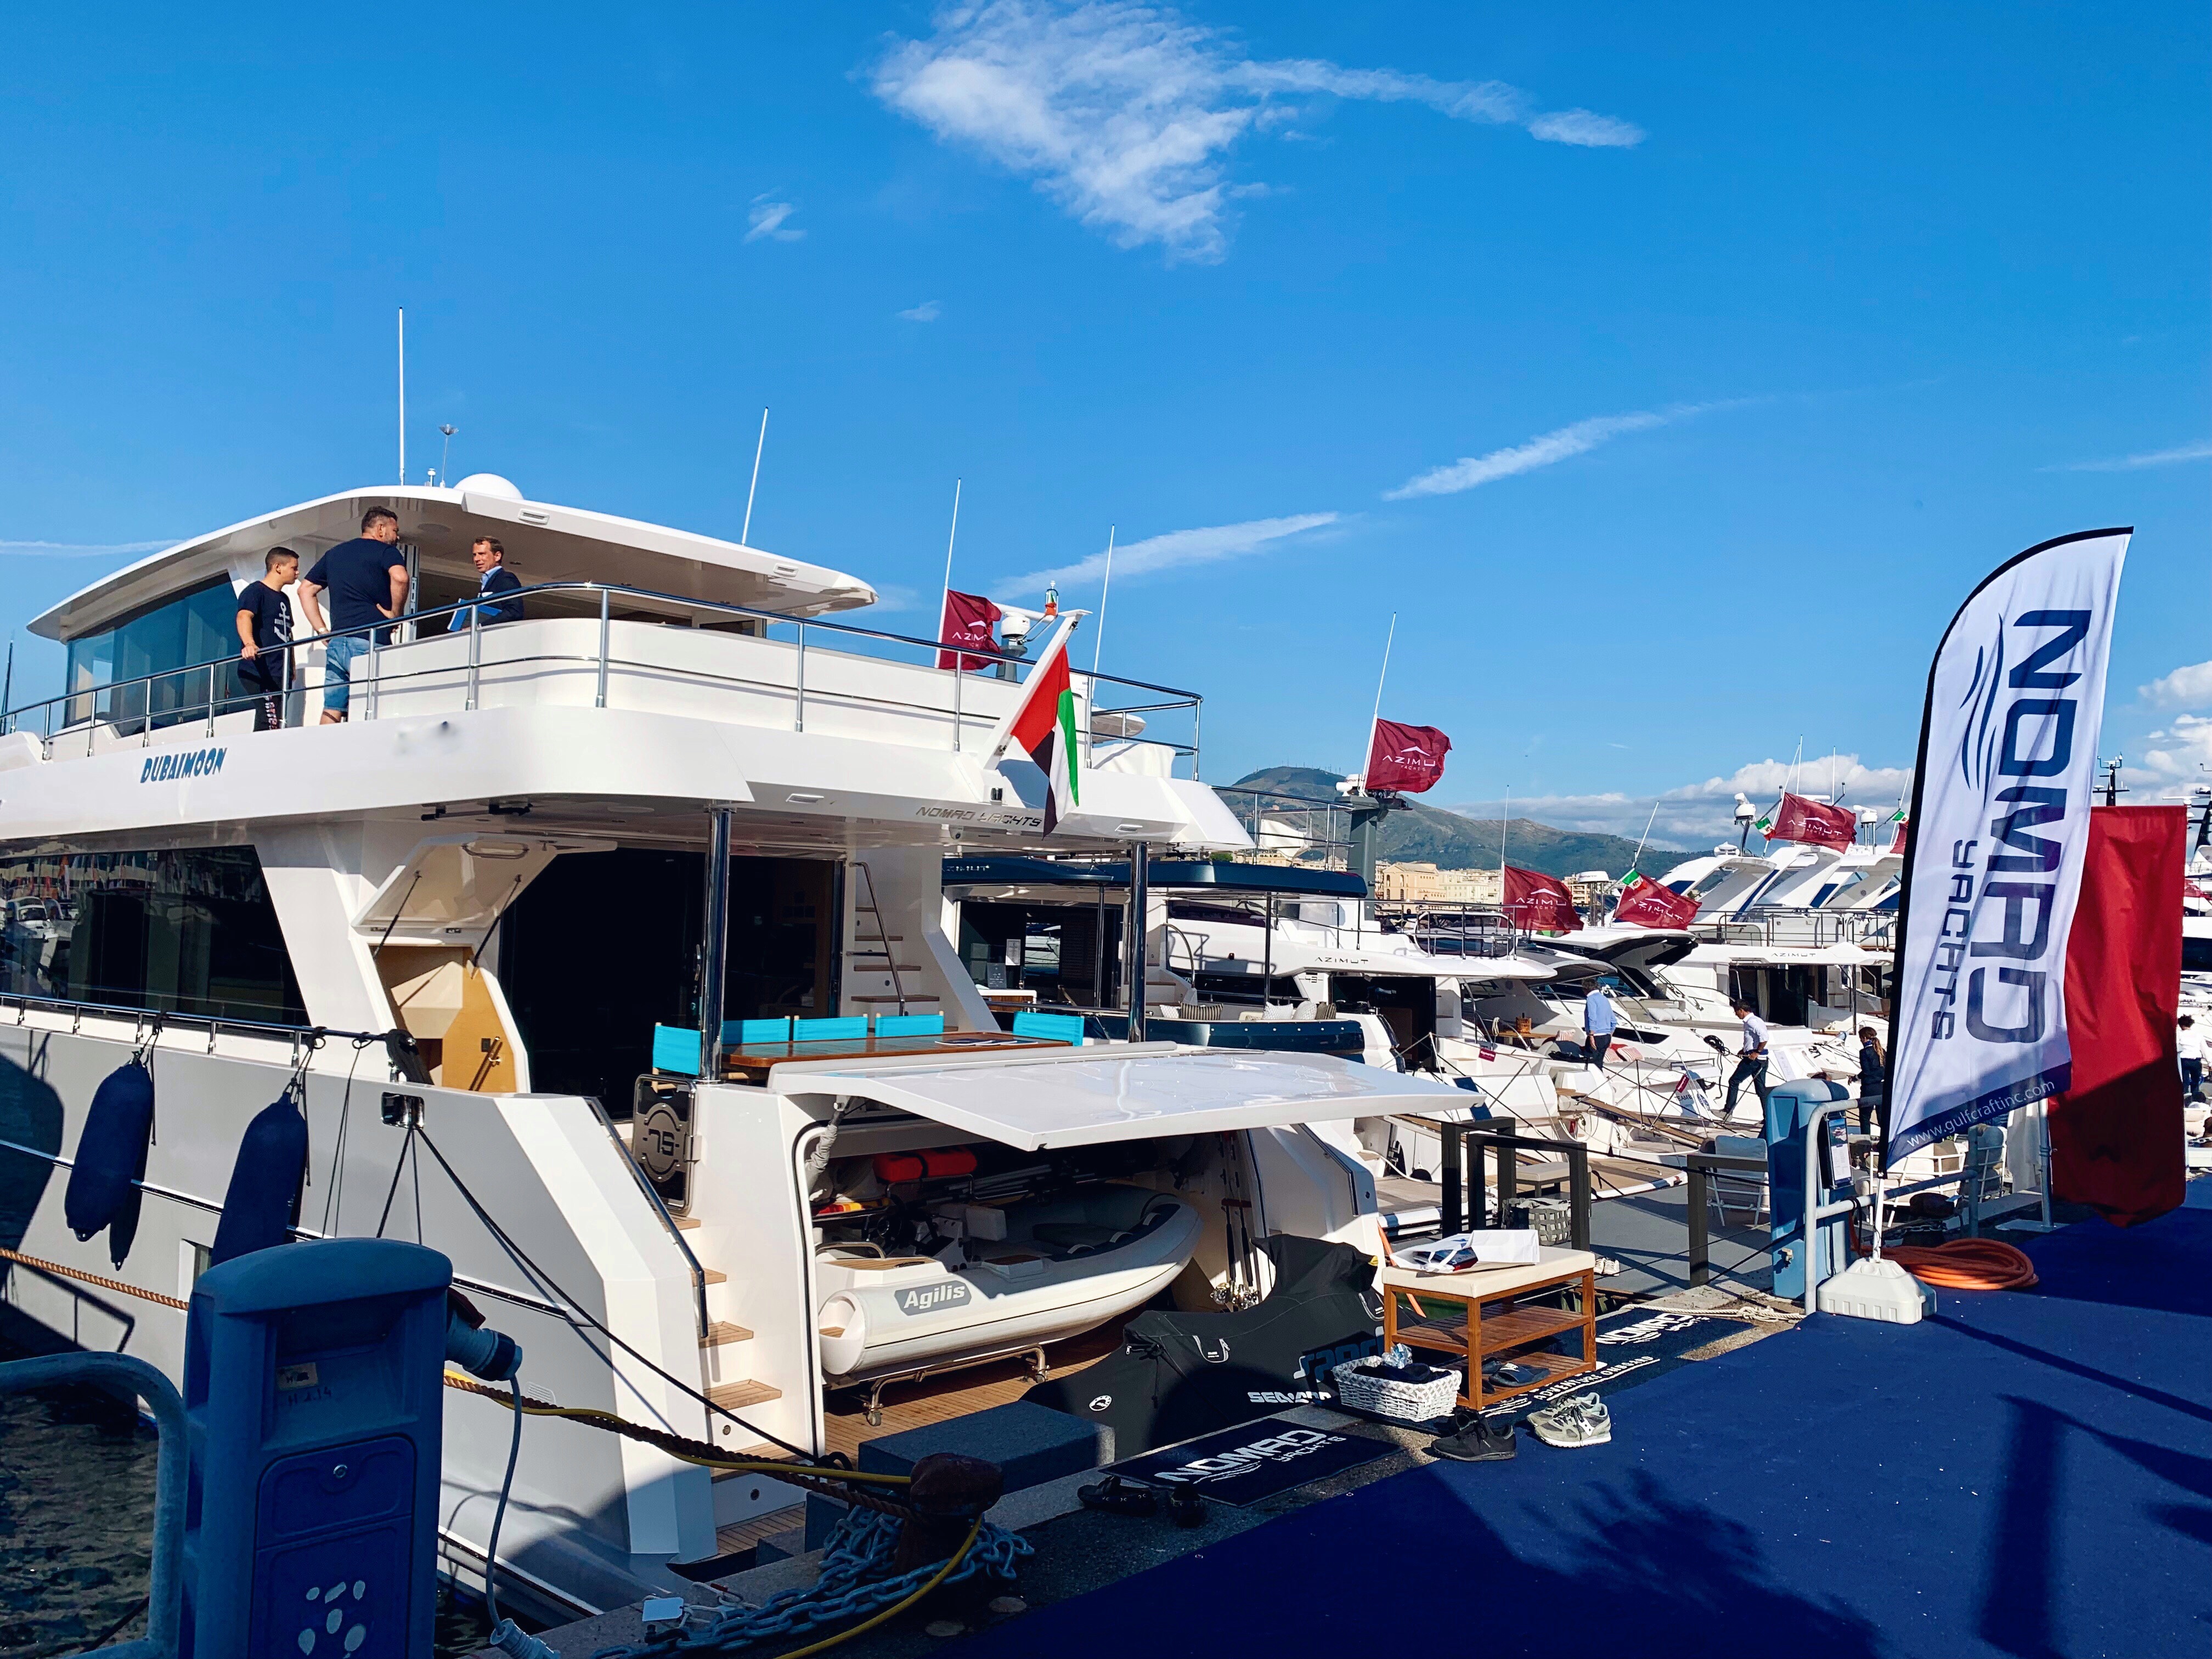 Nomad Yachts at Genoa Boat Show 2019